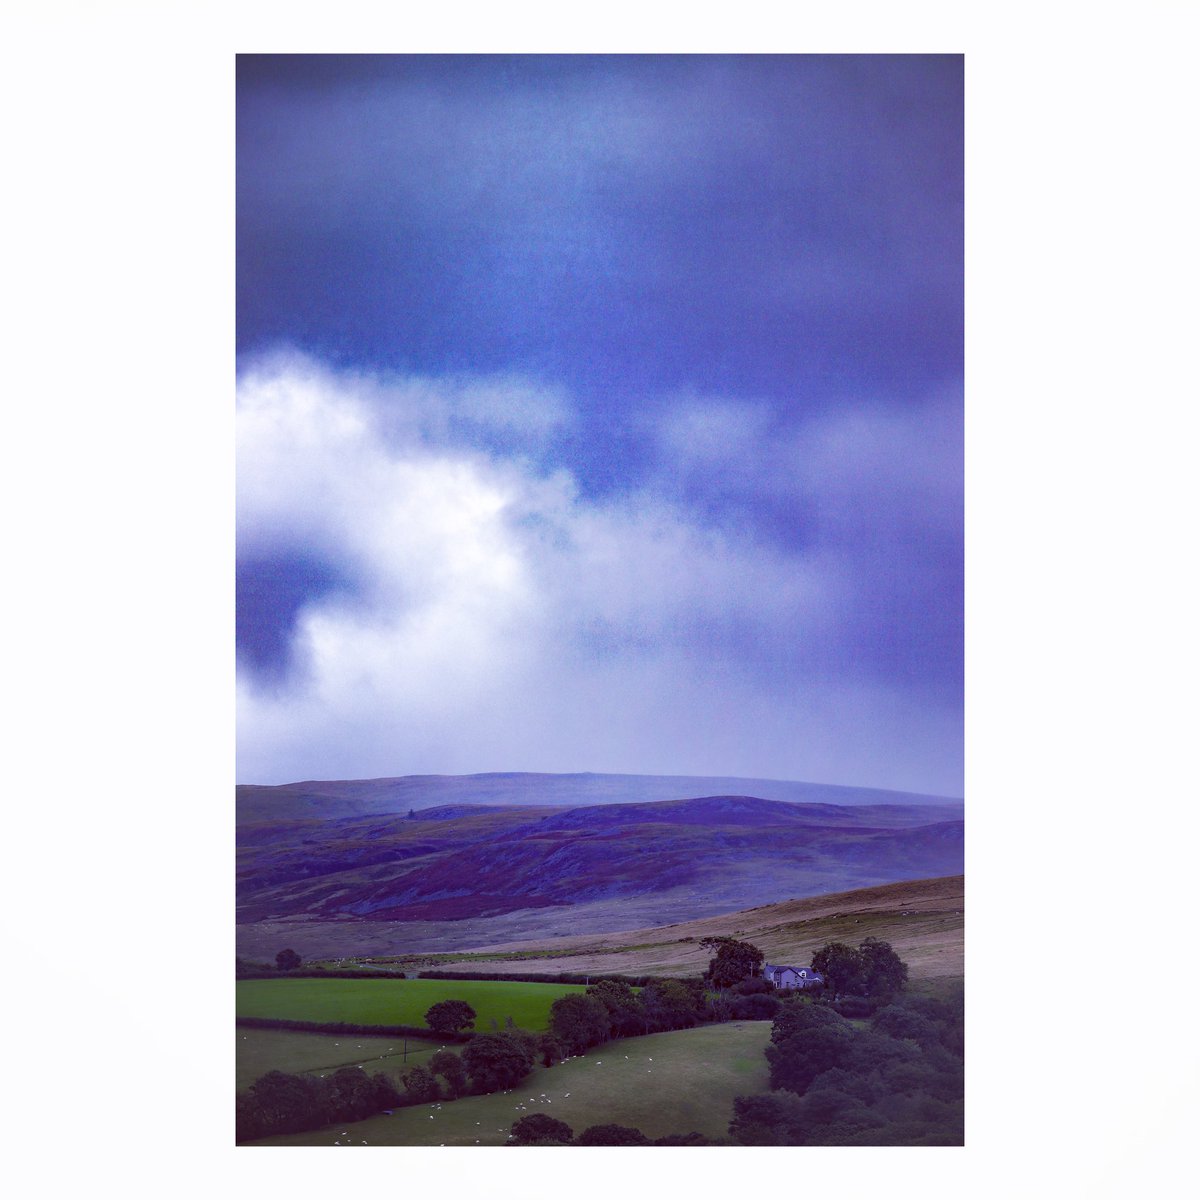 A Welsh Summer 

@BannauB 

#CarregCennen #LandscapePhotography #WalesOnline #MurkyDay #BannauBrycheiniog #CastellCarregCennen #WestWales #WindyDay #AugustDay #WelshSummertime